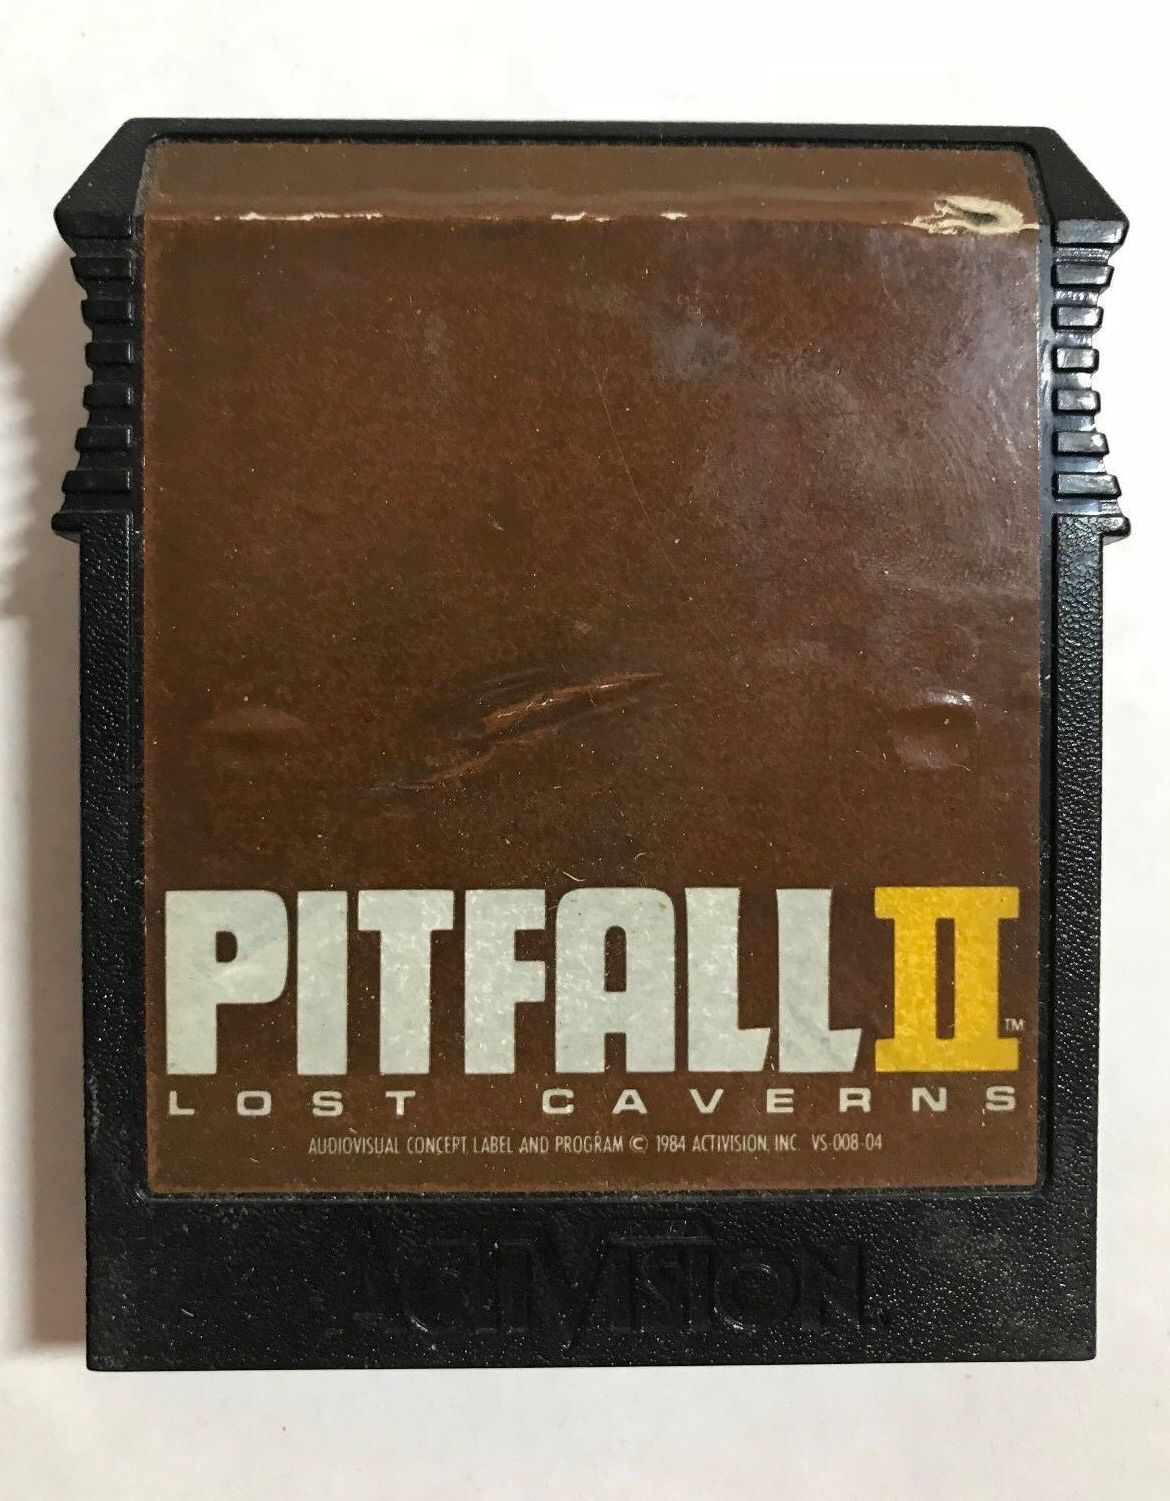 Pitfall II: Lost Caverns - Colecovision